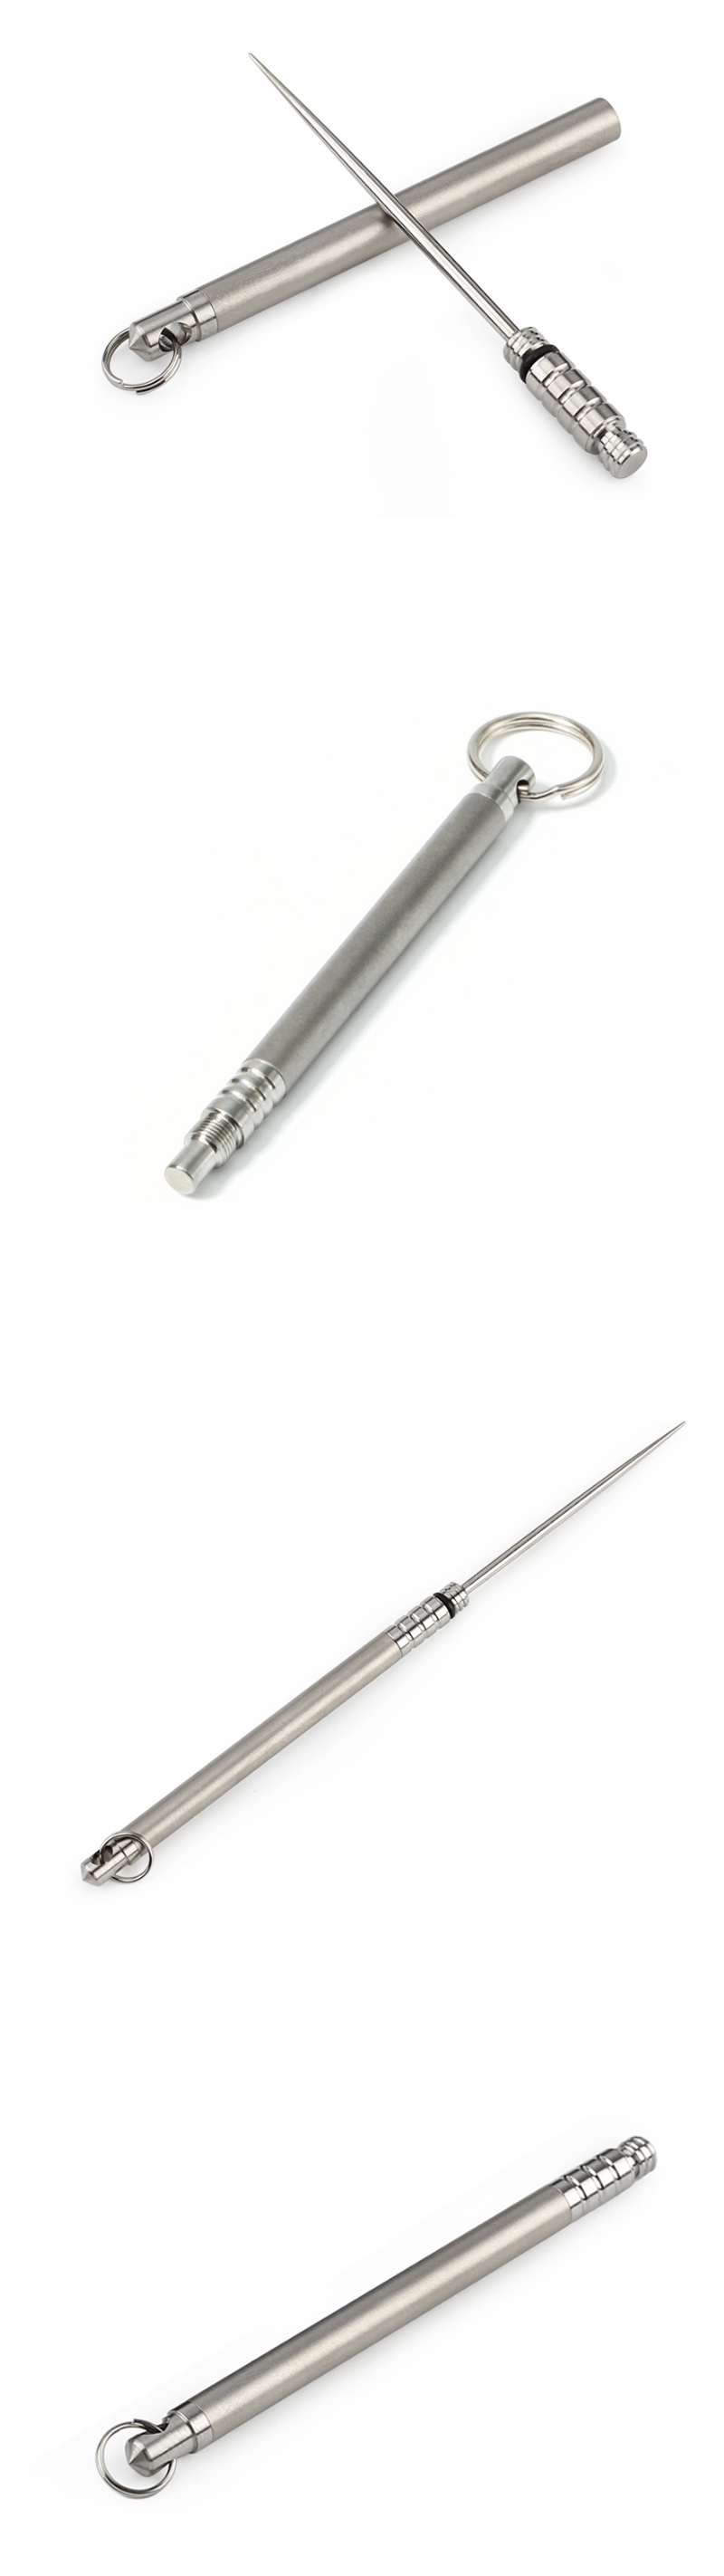 IPReereg-Outdoor-EDC-Titanium-Toothpick-Tooth-Pick-Holder-Fruit-Fork-Emergency-Safety-Tools-Kit-1551464-1